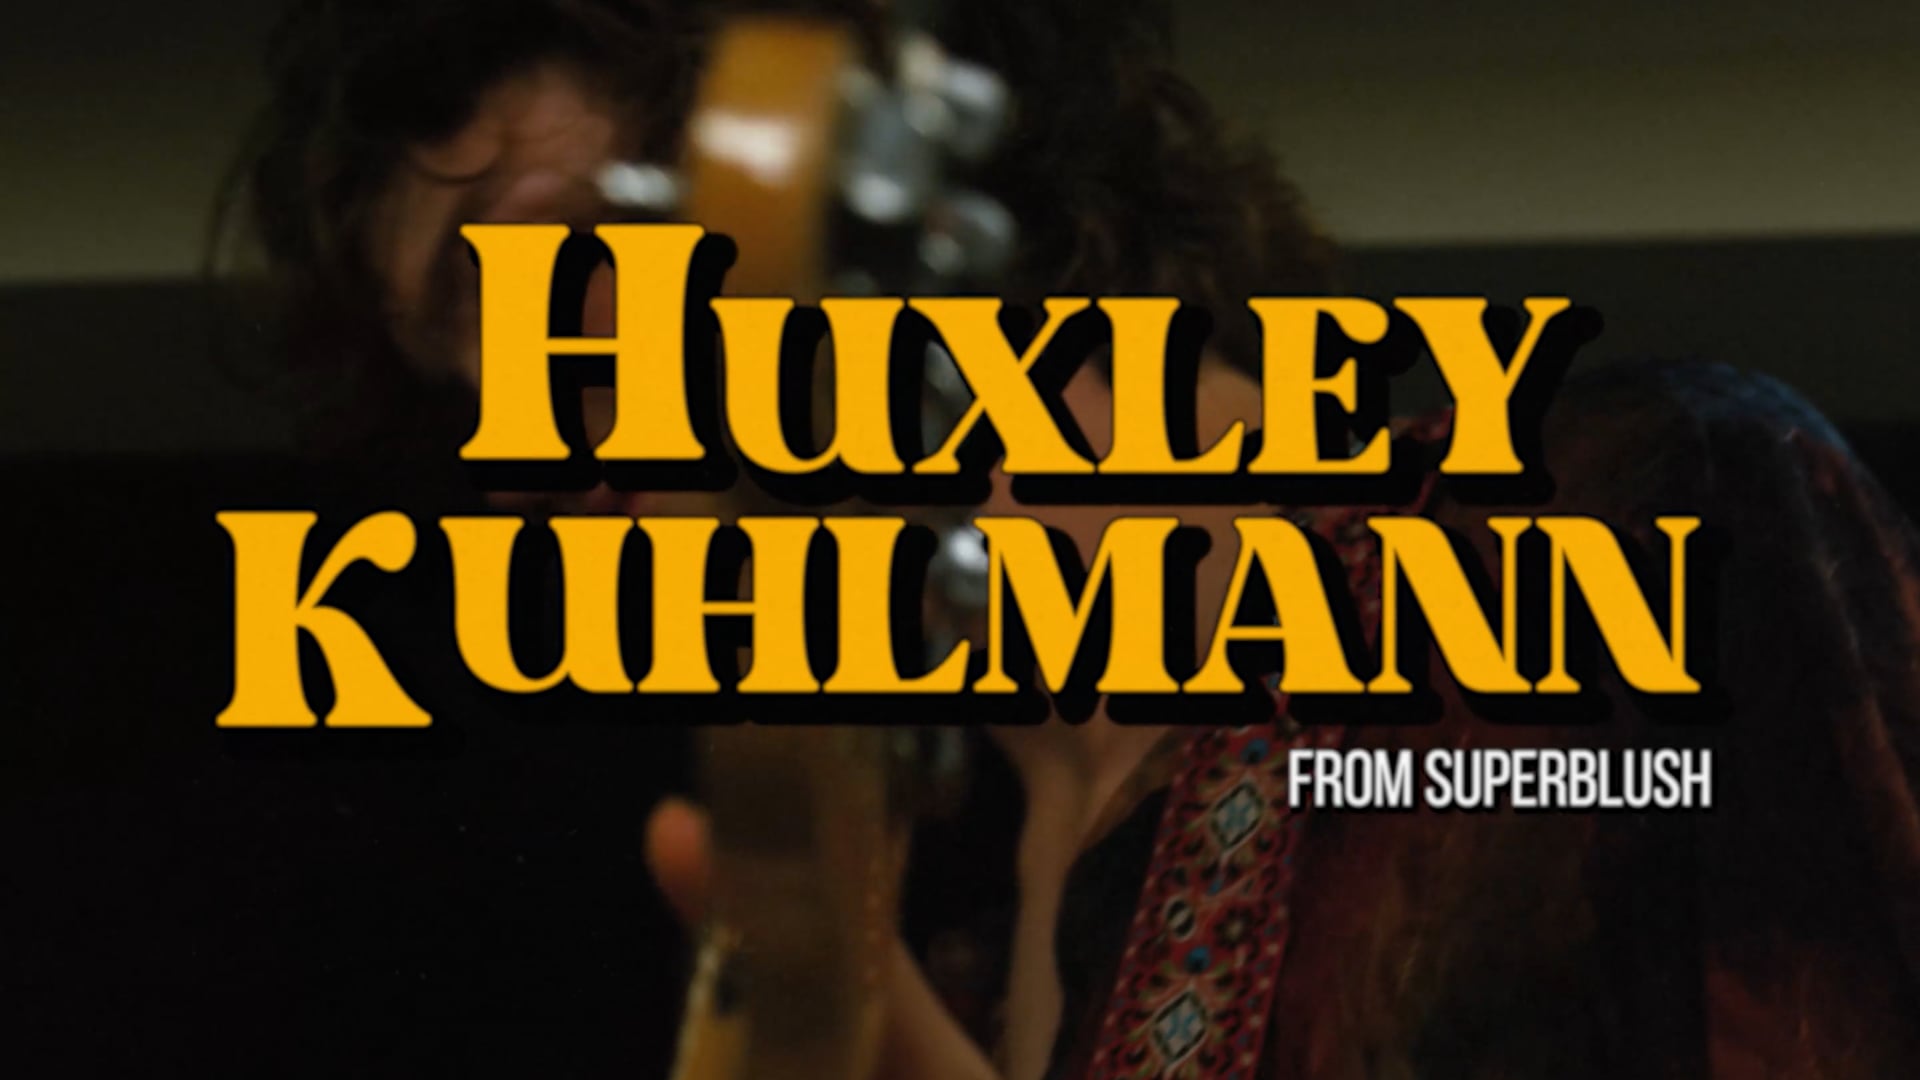 Huxley Kuhlmann from Superblush.